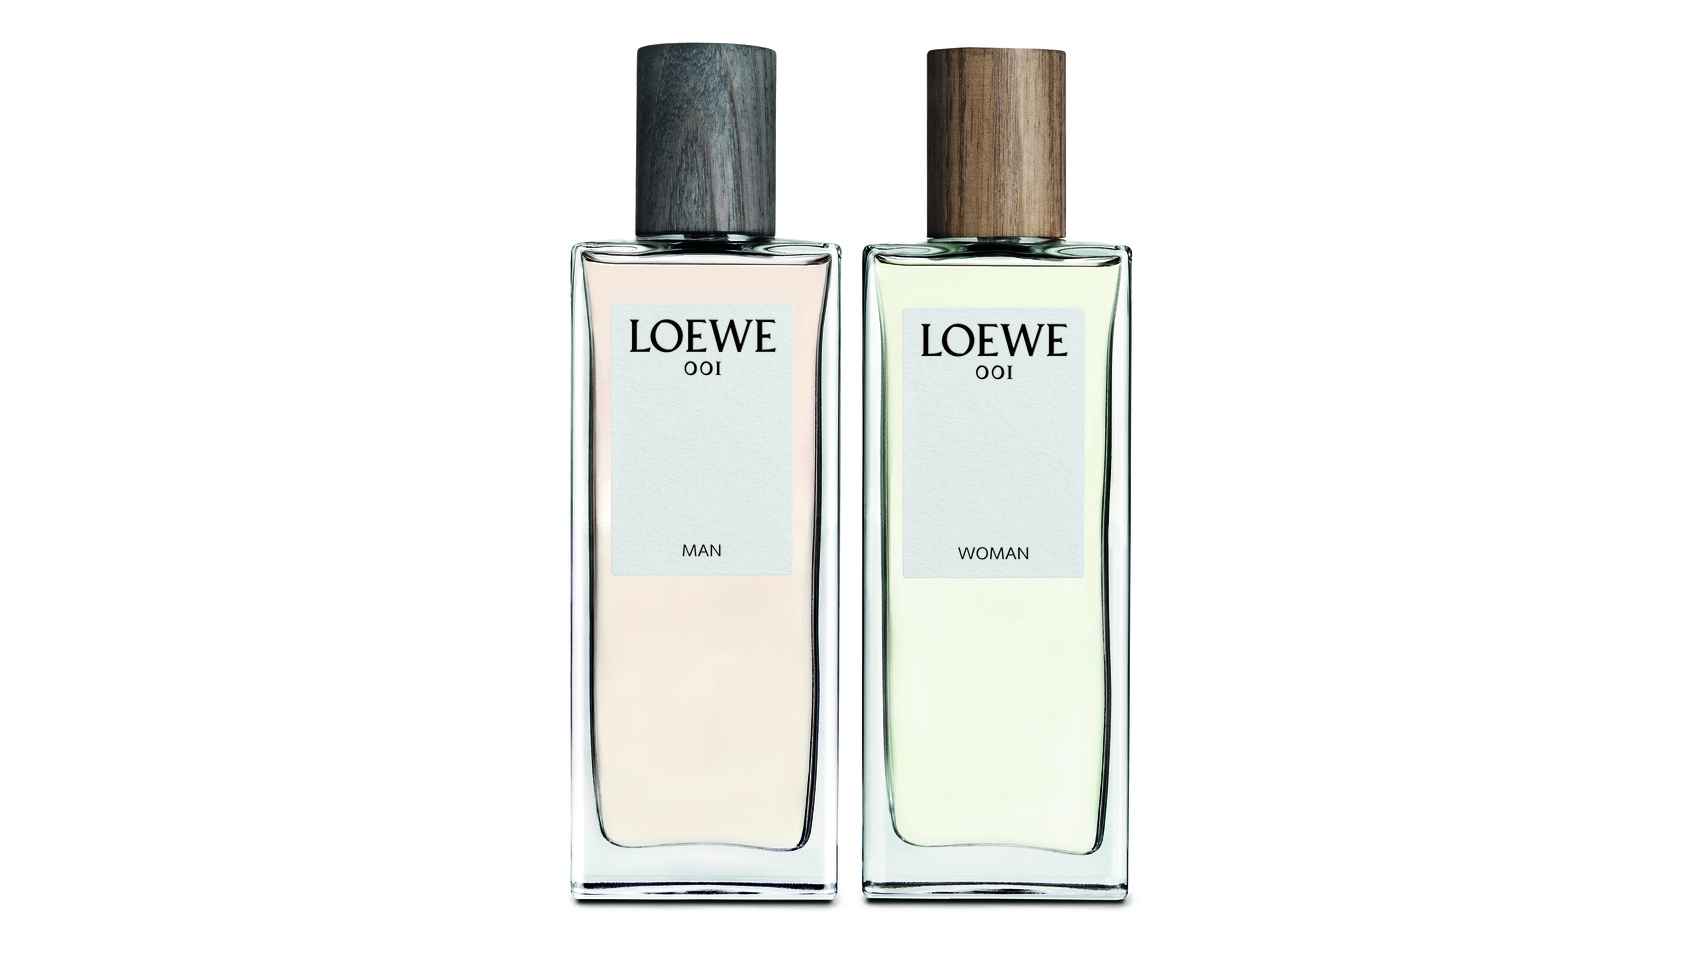 Loewe 001 Man.